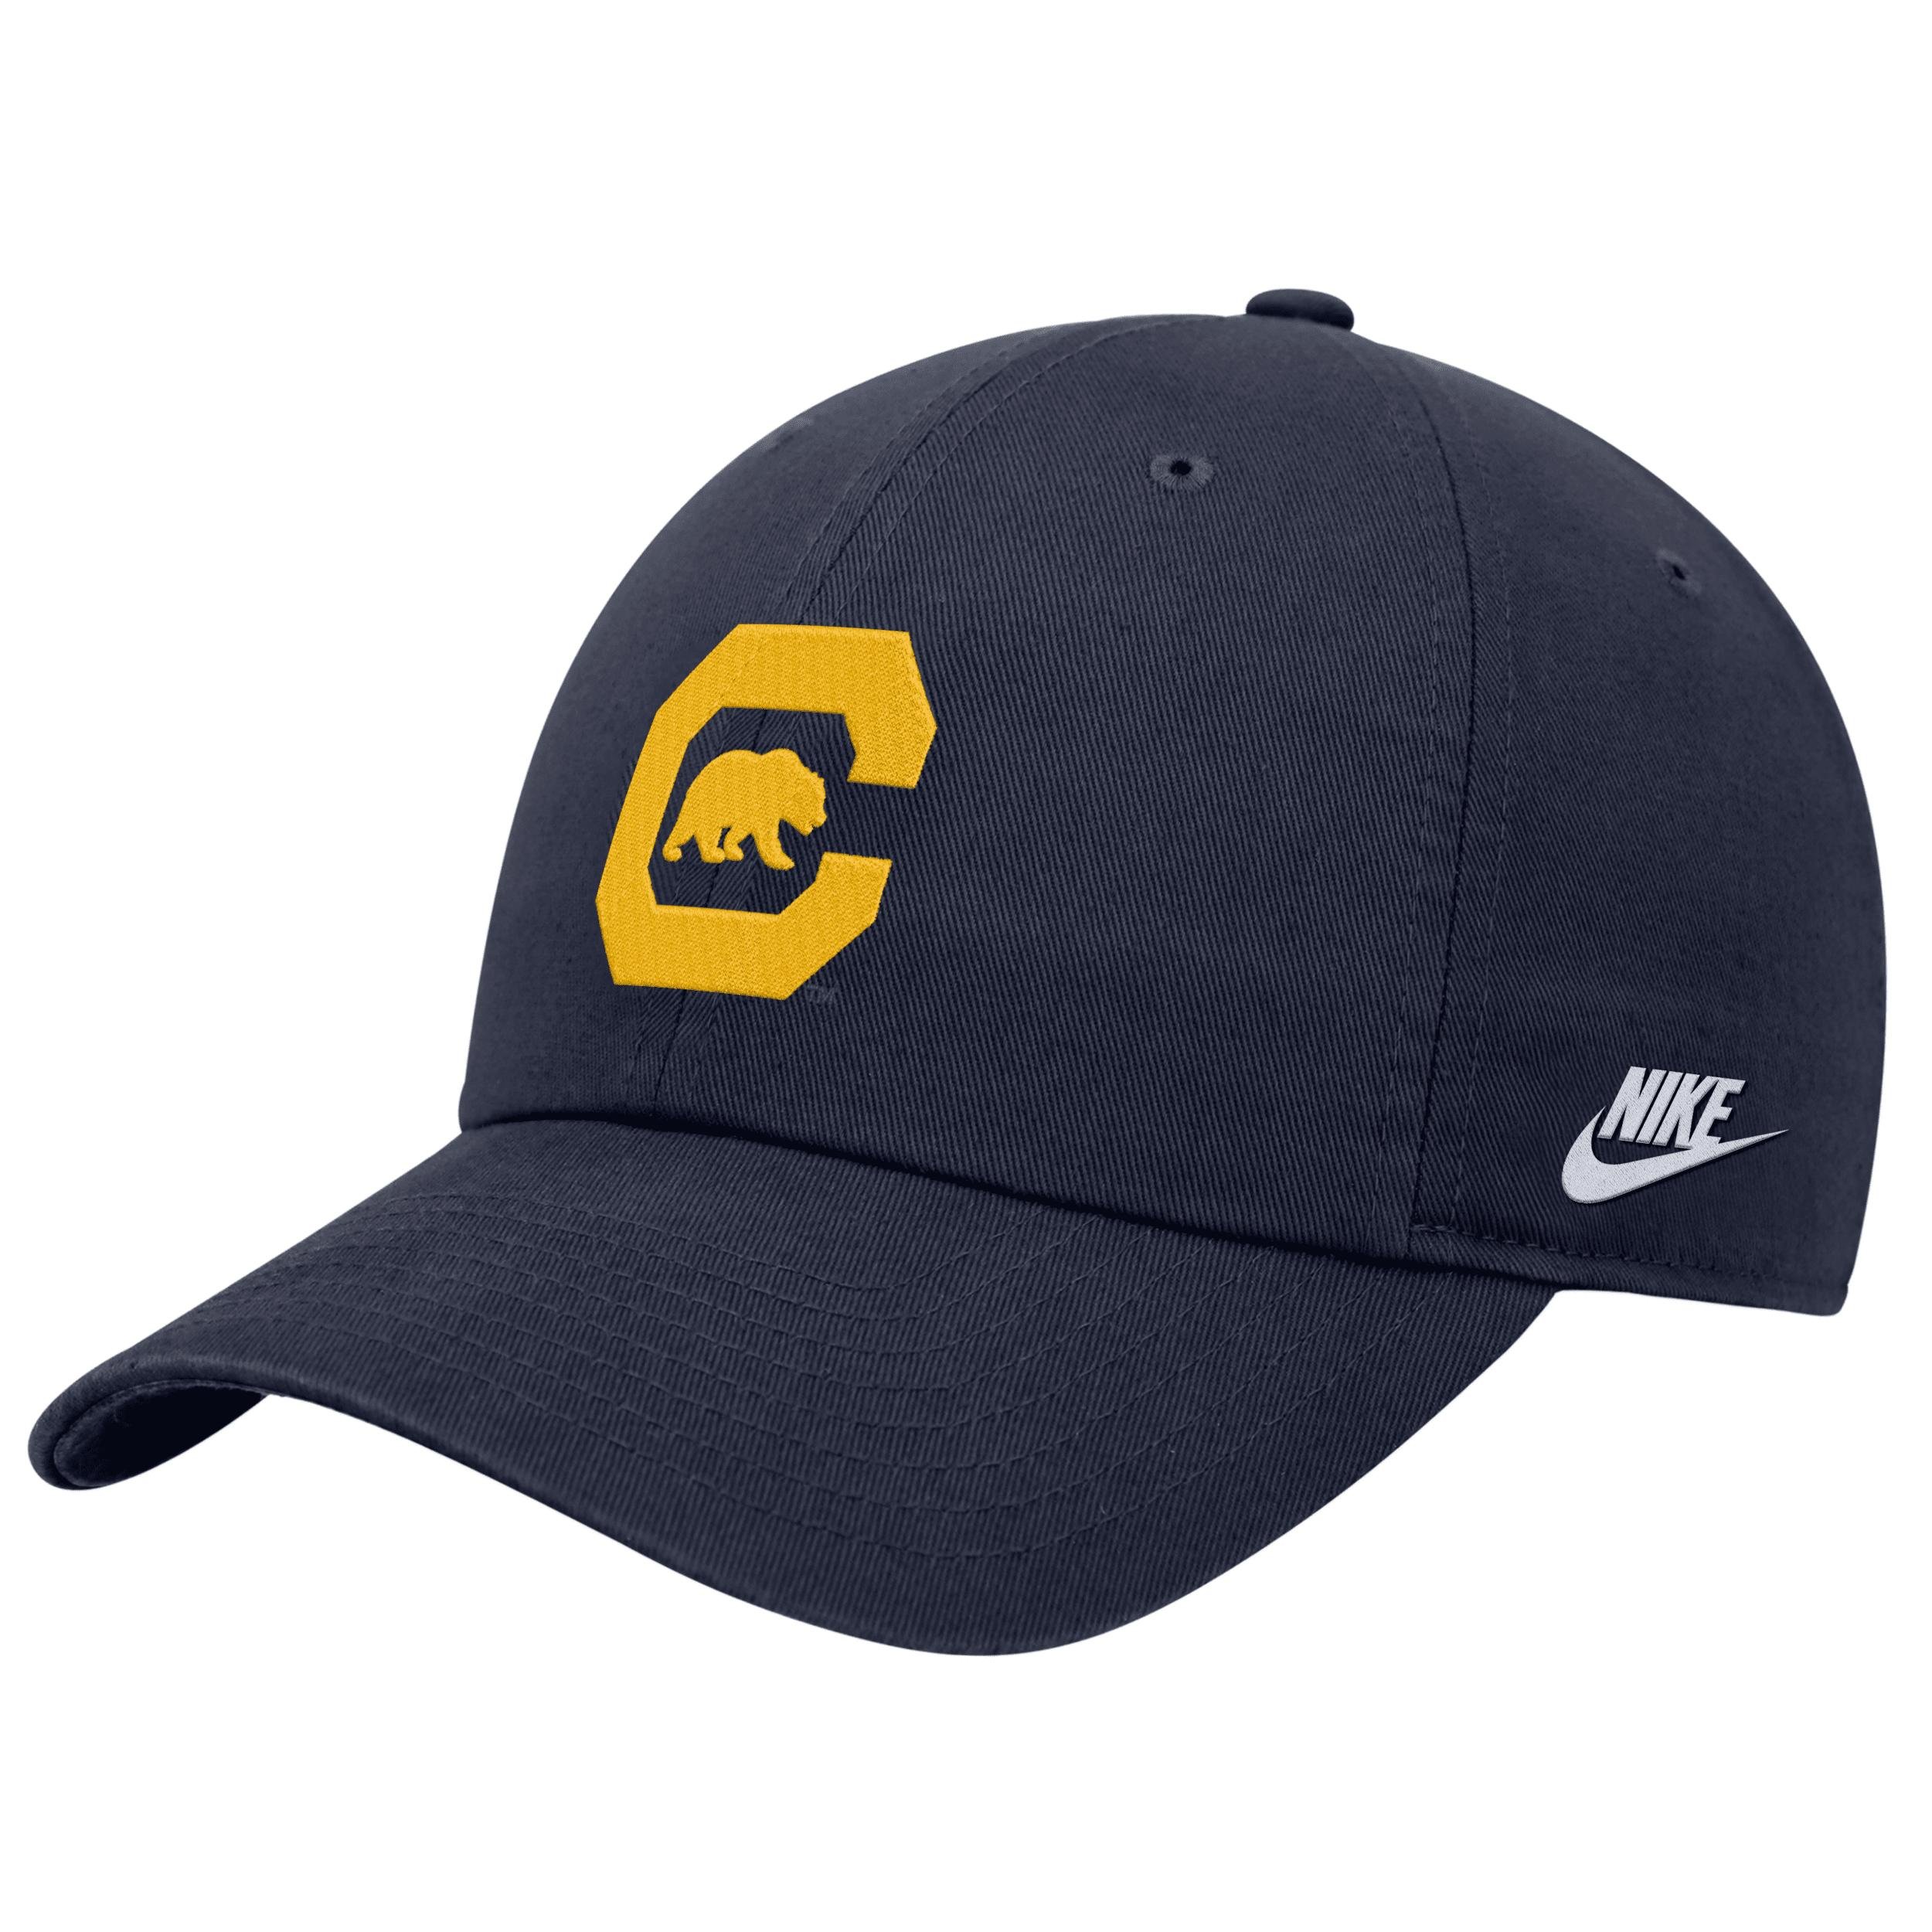 Cal Nike Unisex College Cap by NIKE